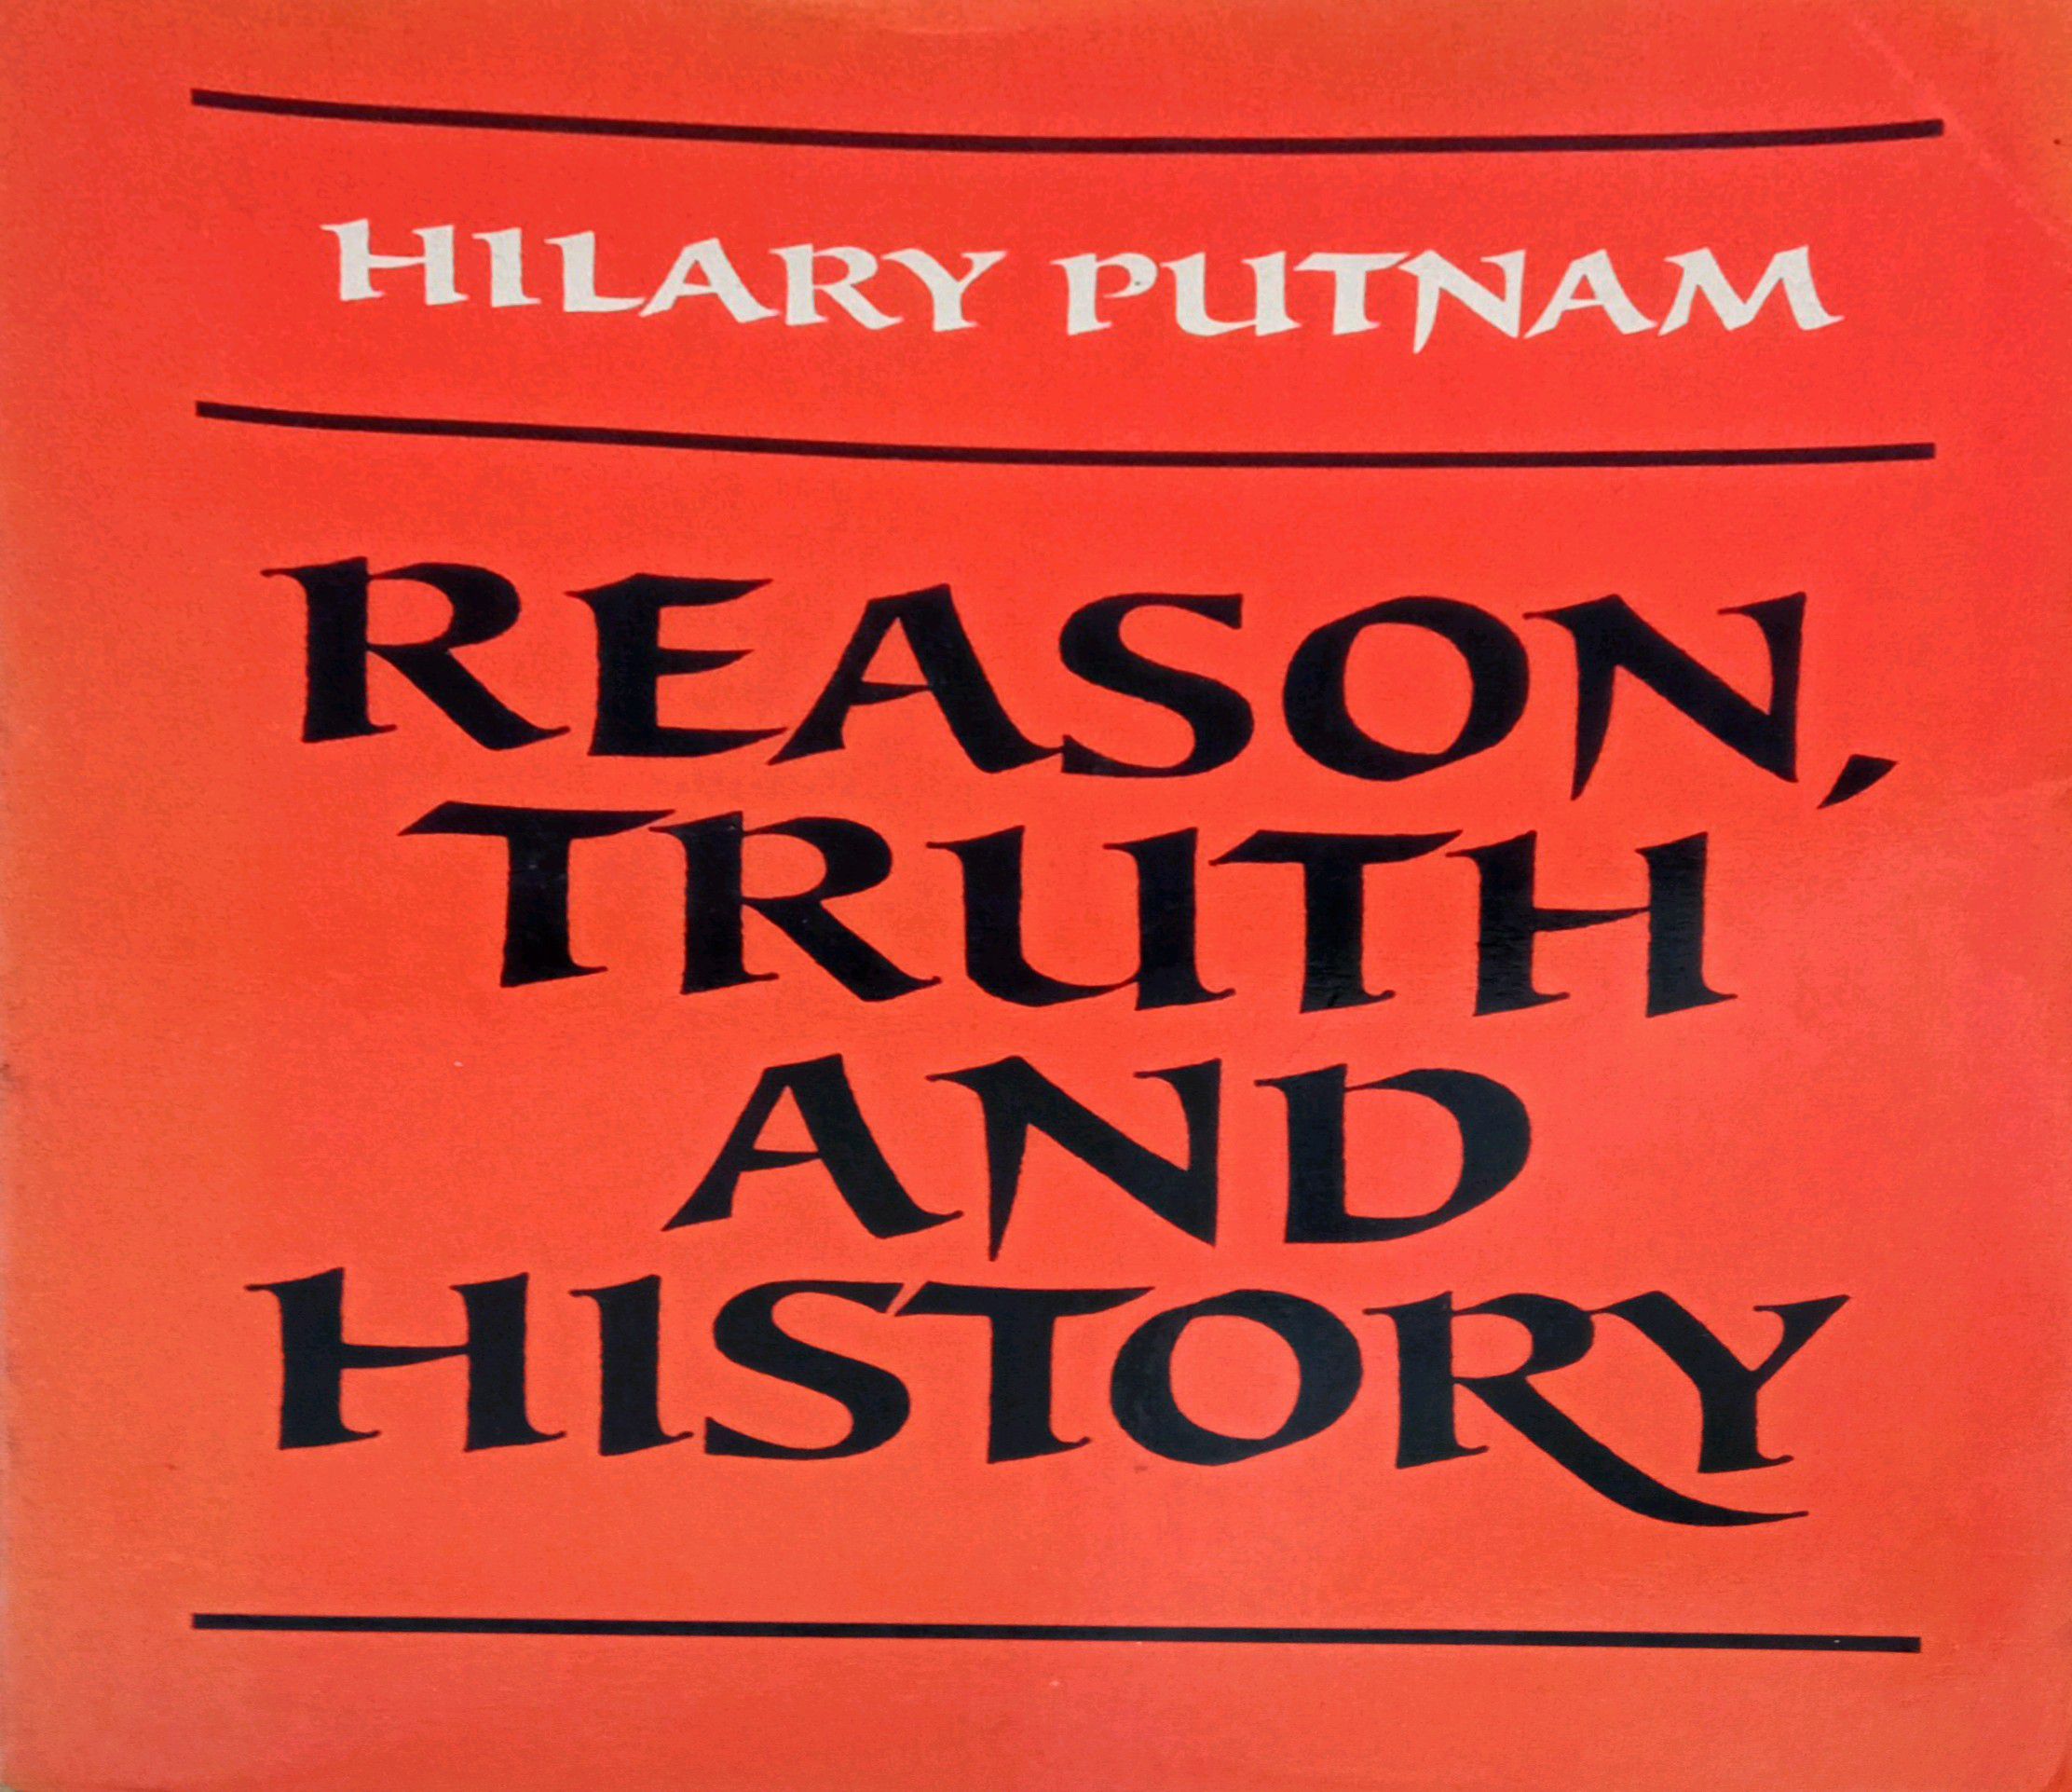 REASON, TRUTH AND HISTORY